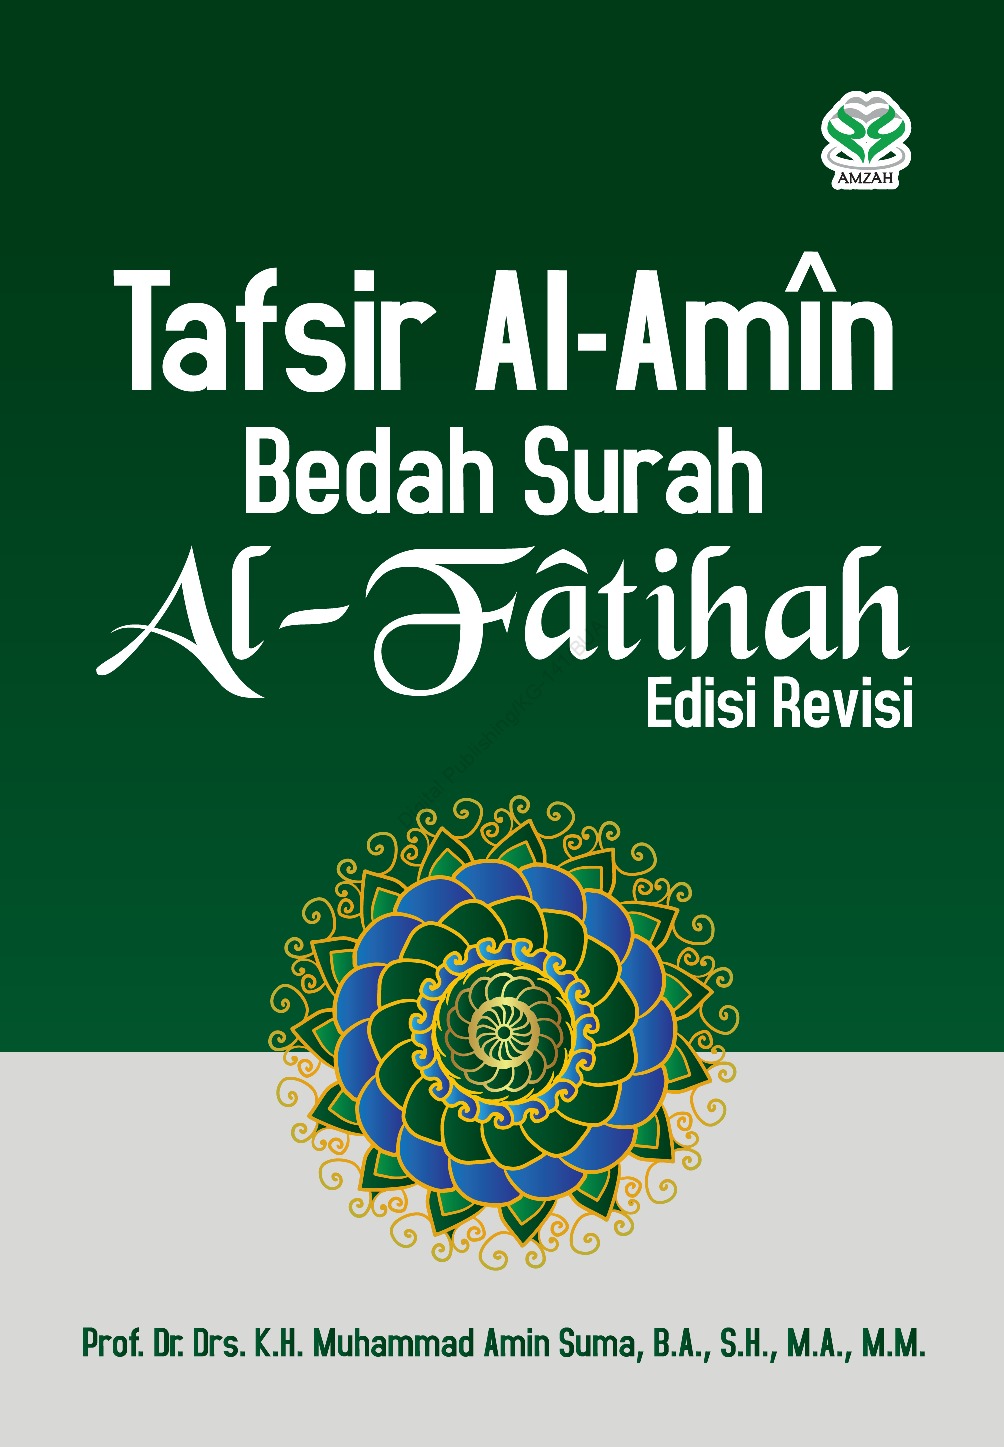 Tafsir Al-Amin bedah surah Al-Fatihah